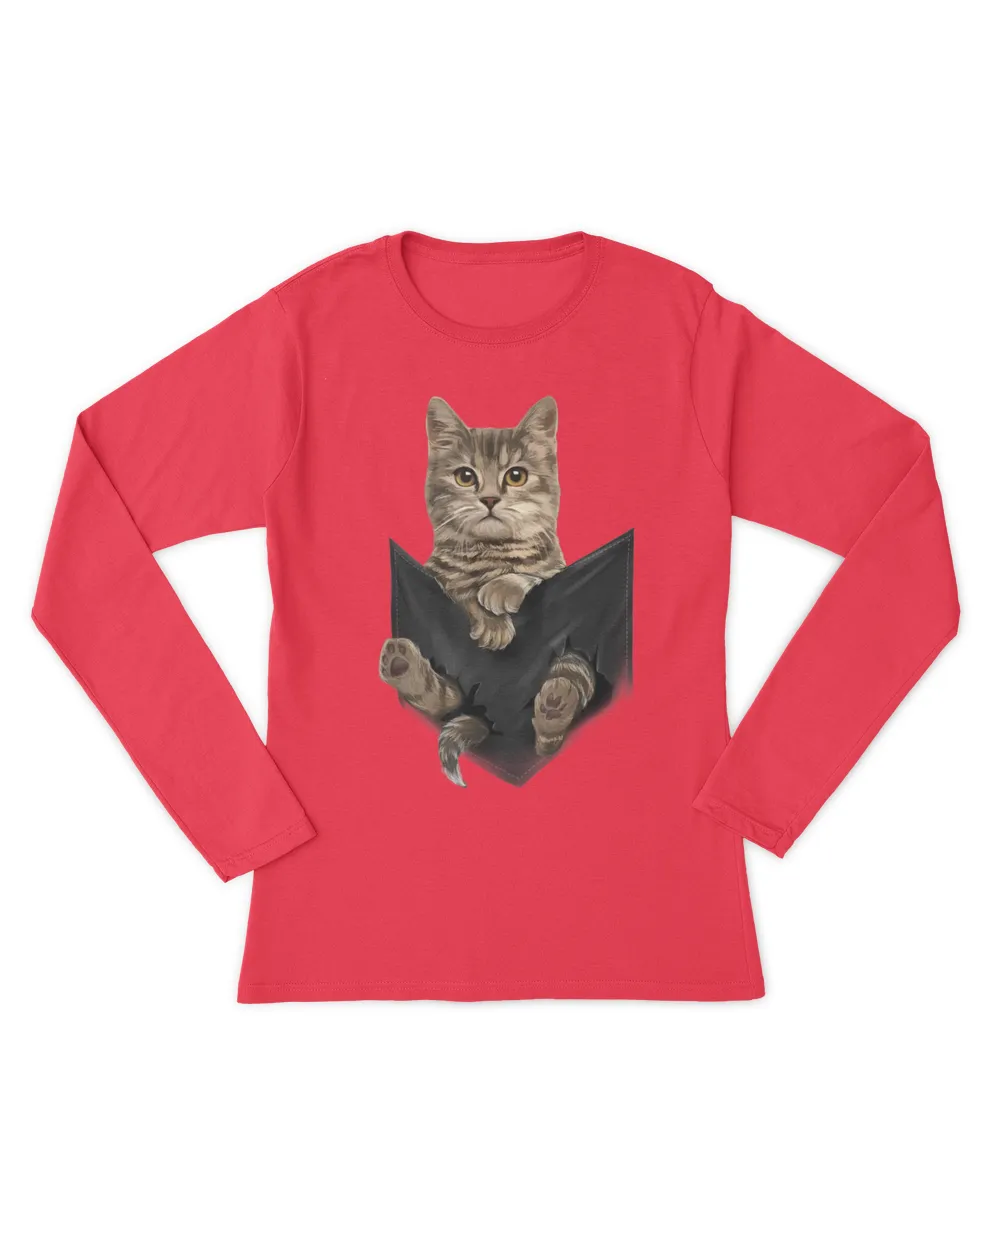 Brown Cat Sits in Pocket T Shirt Cats Tee Shirt QTCAT202211010004